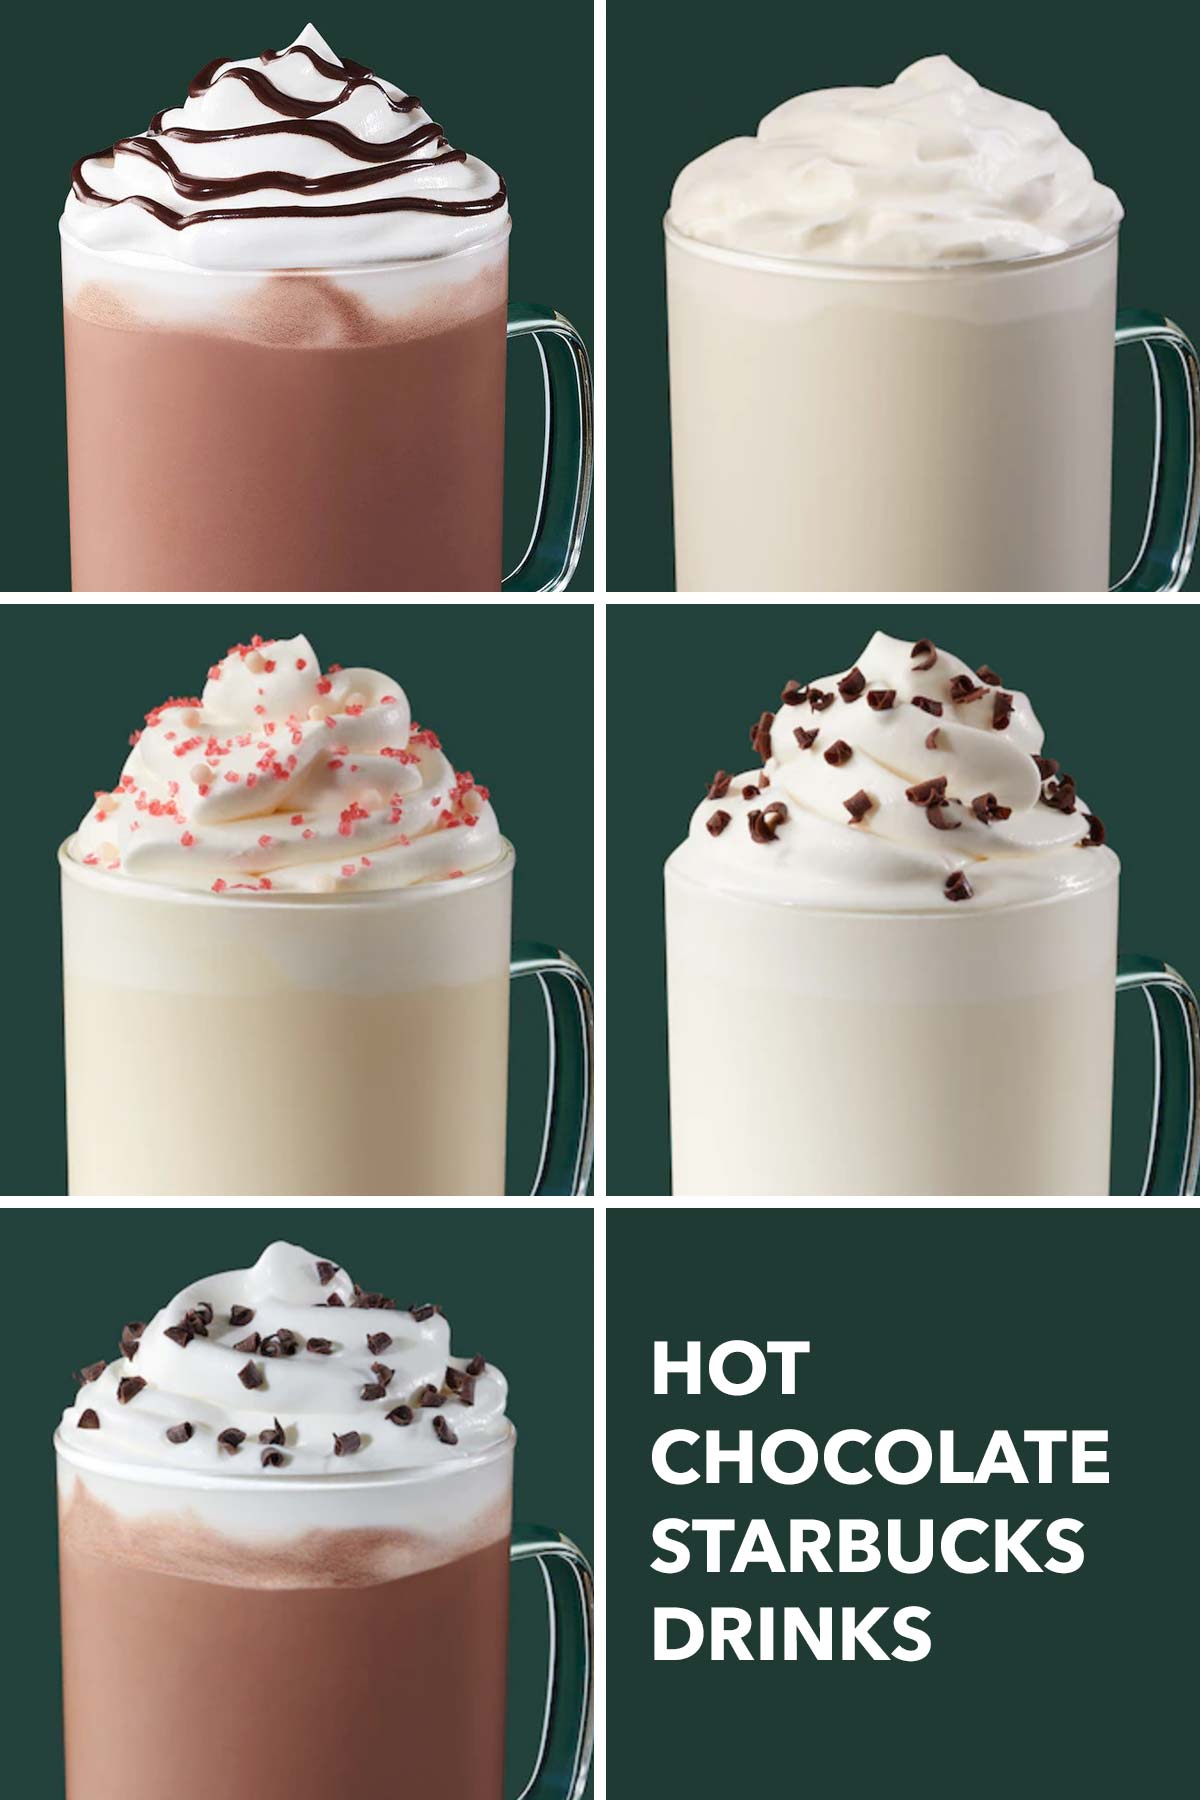 Five hot chocolate drinks from Starbucks.